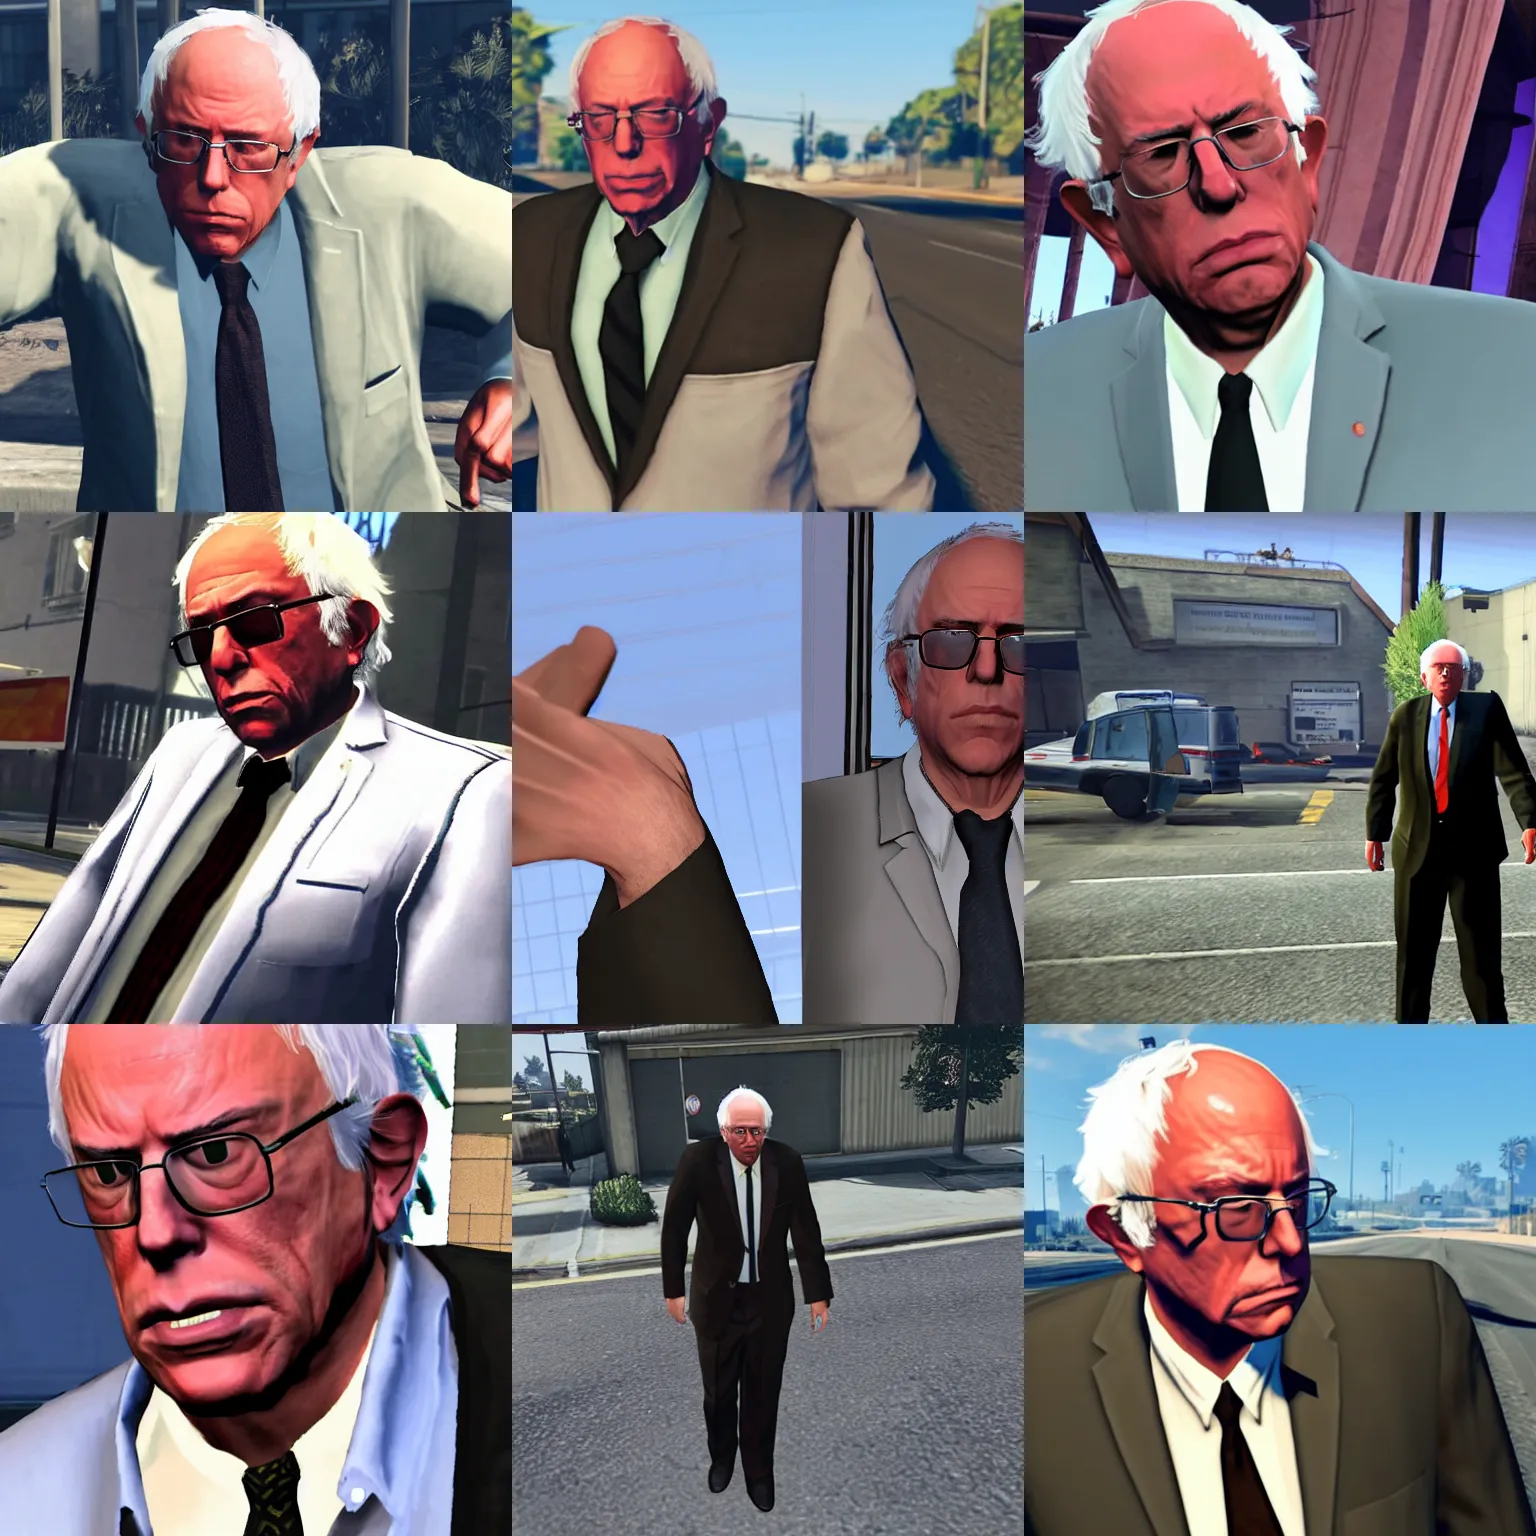 Prompt: bernie sanders in damaged suit, frowning, as the protagonist of gta 5, screenshot